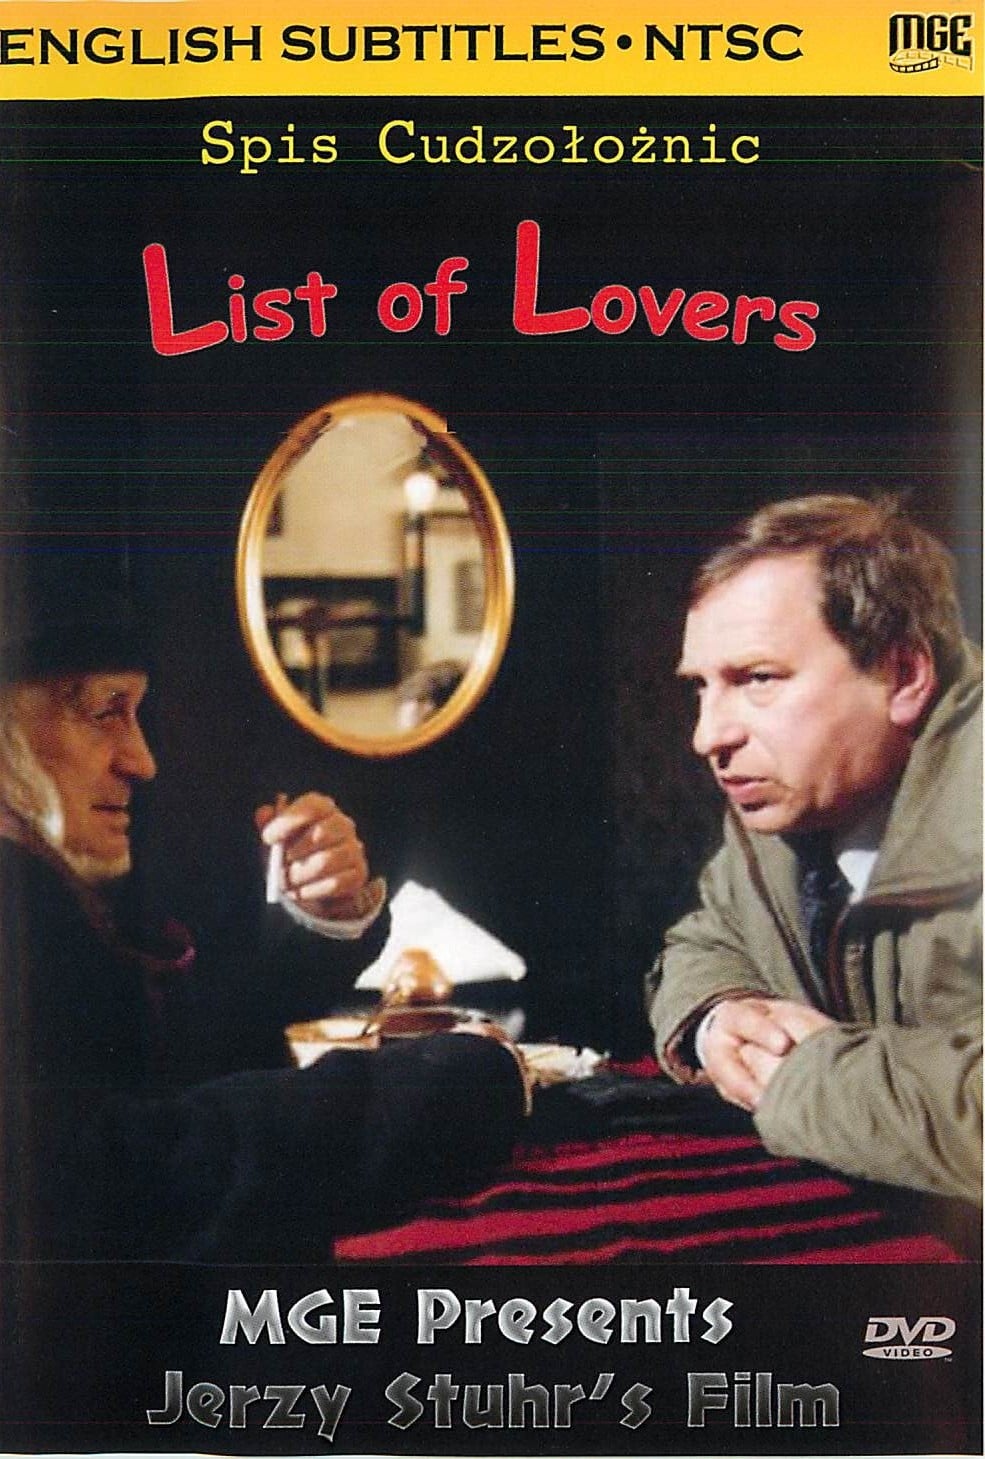 List of Lovers